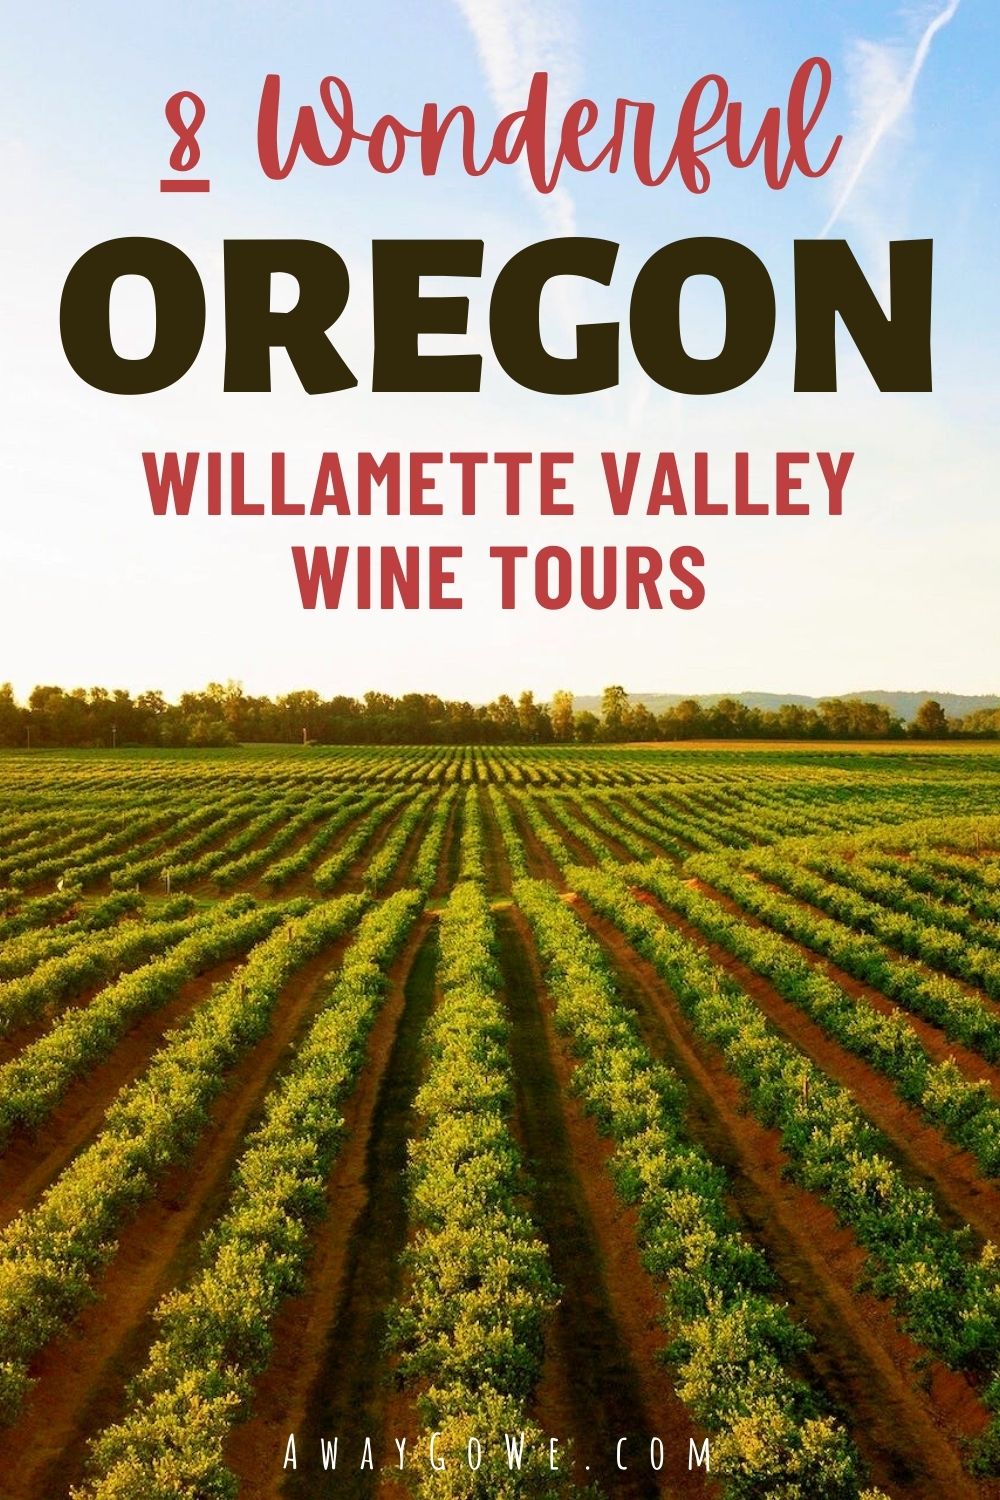 Willamette Valley Wine Tours